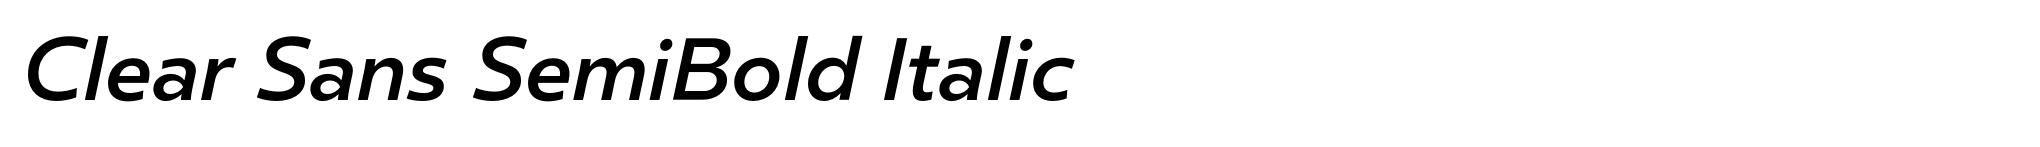 Clear Sans SemiBold Italic image